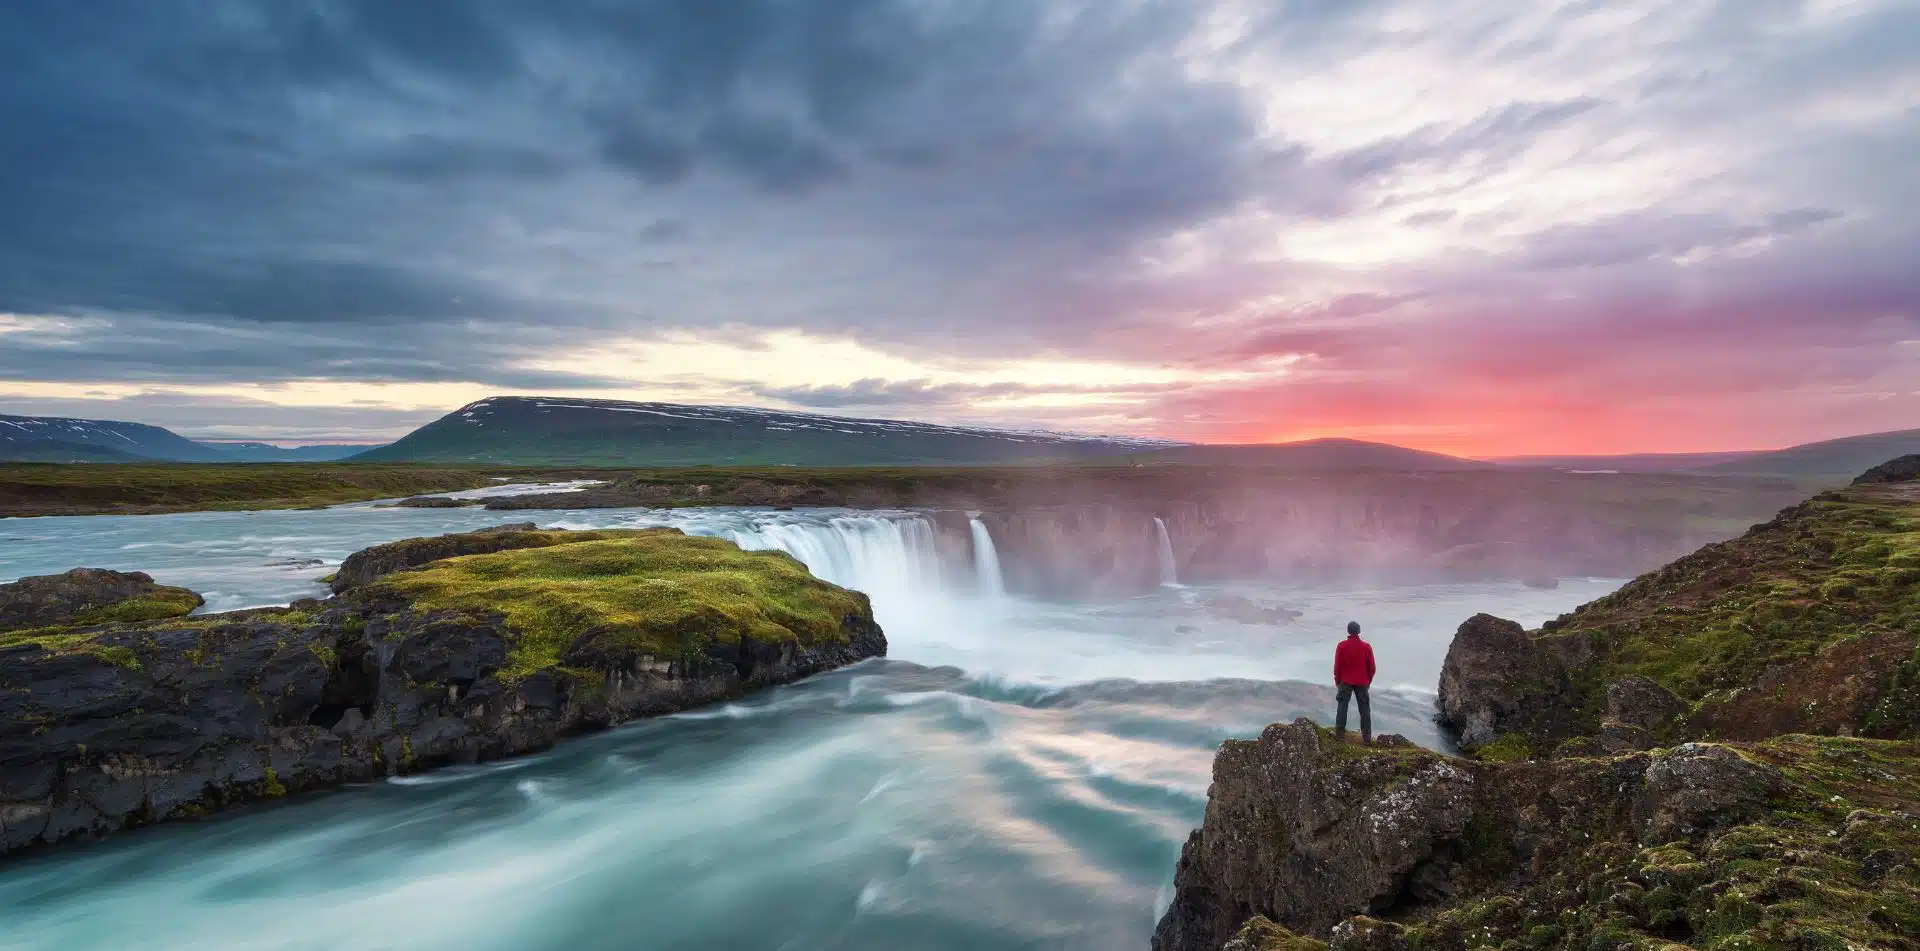 Traveler admiring the stunning views in Iceland